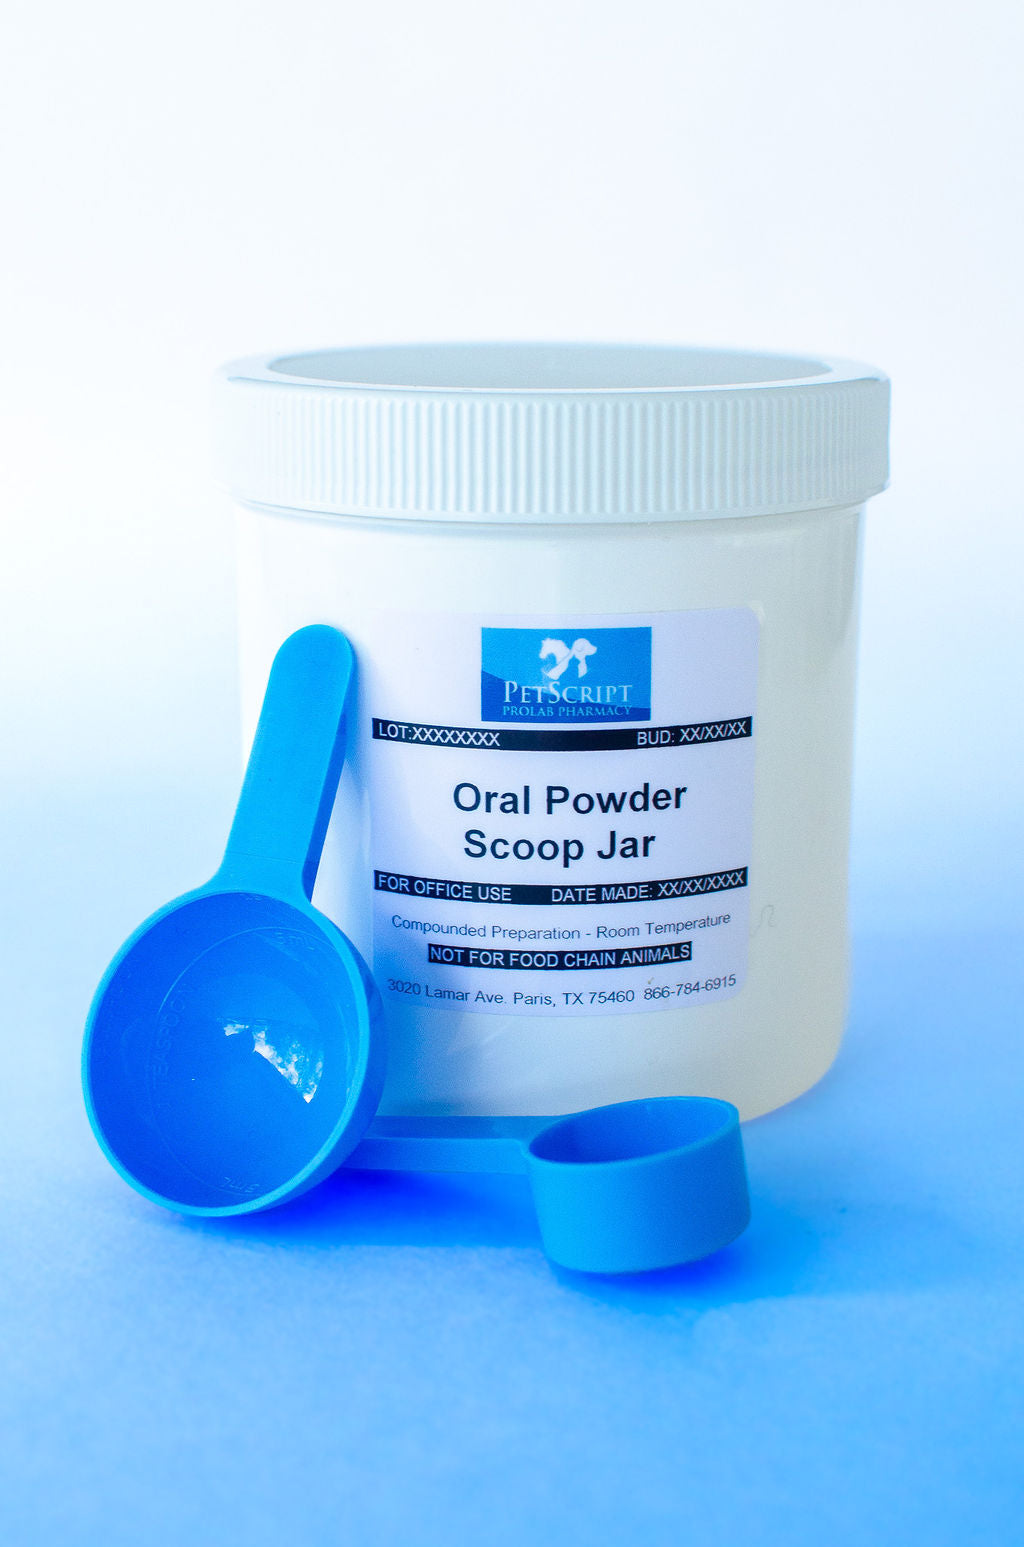 Prednisone Oral Powder - PetScript Pharmacy